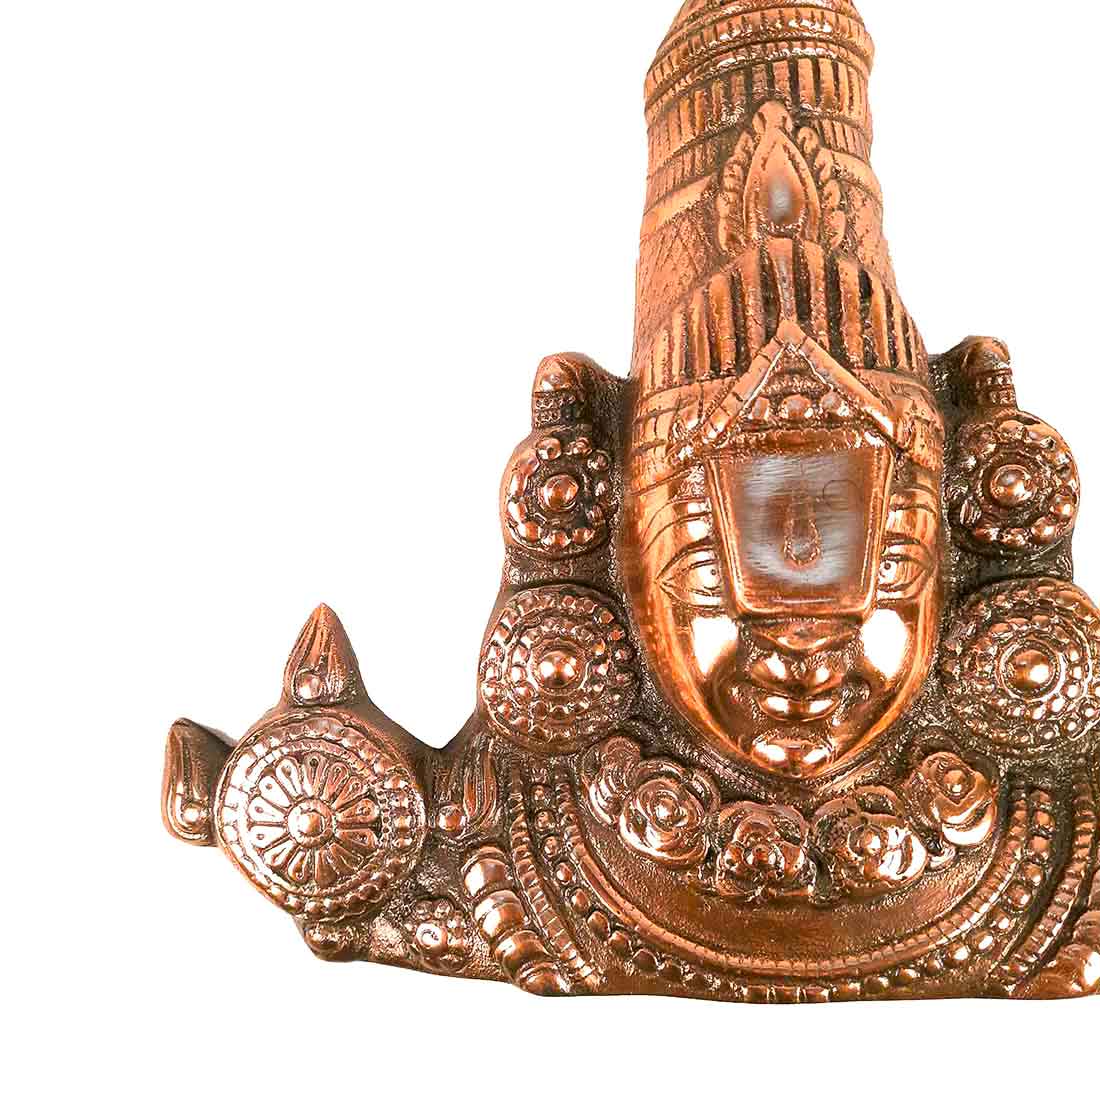 Sri Balaji Wall Hanging Idol | Venkateswara Swami Wall Statue | Tirupati Balaji Wall Hanging Murti | Religious & Spiritual Sculpture - for Gift, Home, Living Room, Office, Puja Room Decoration   - 12 Inch